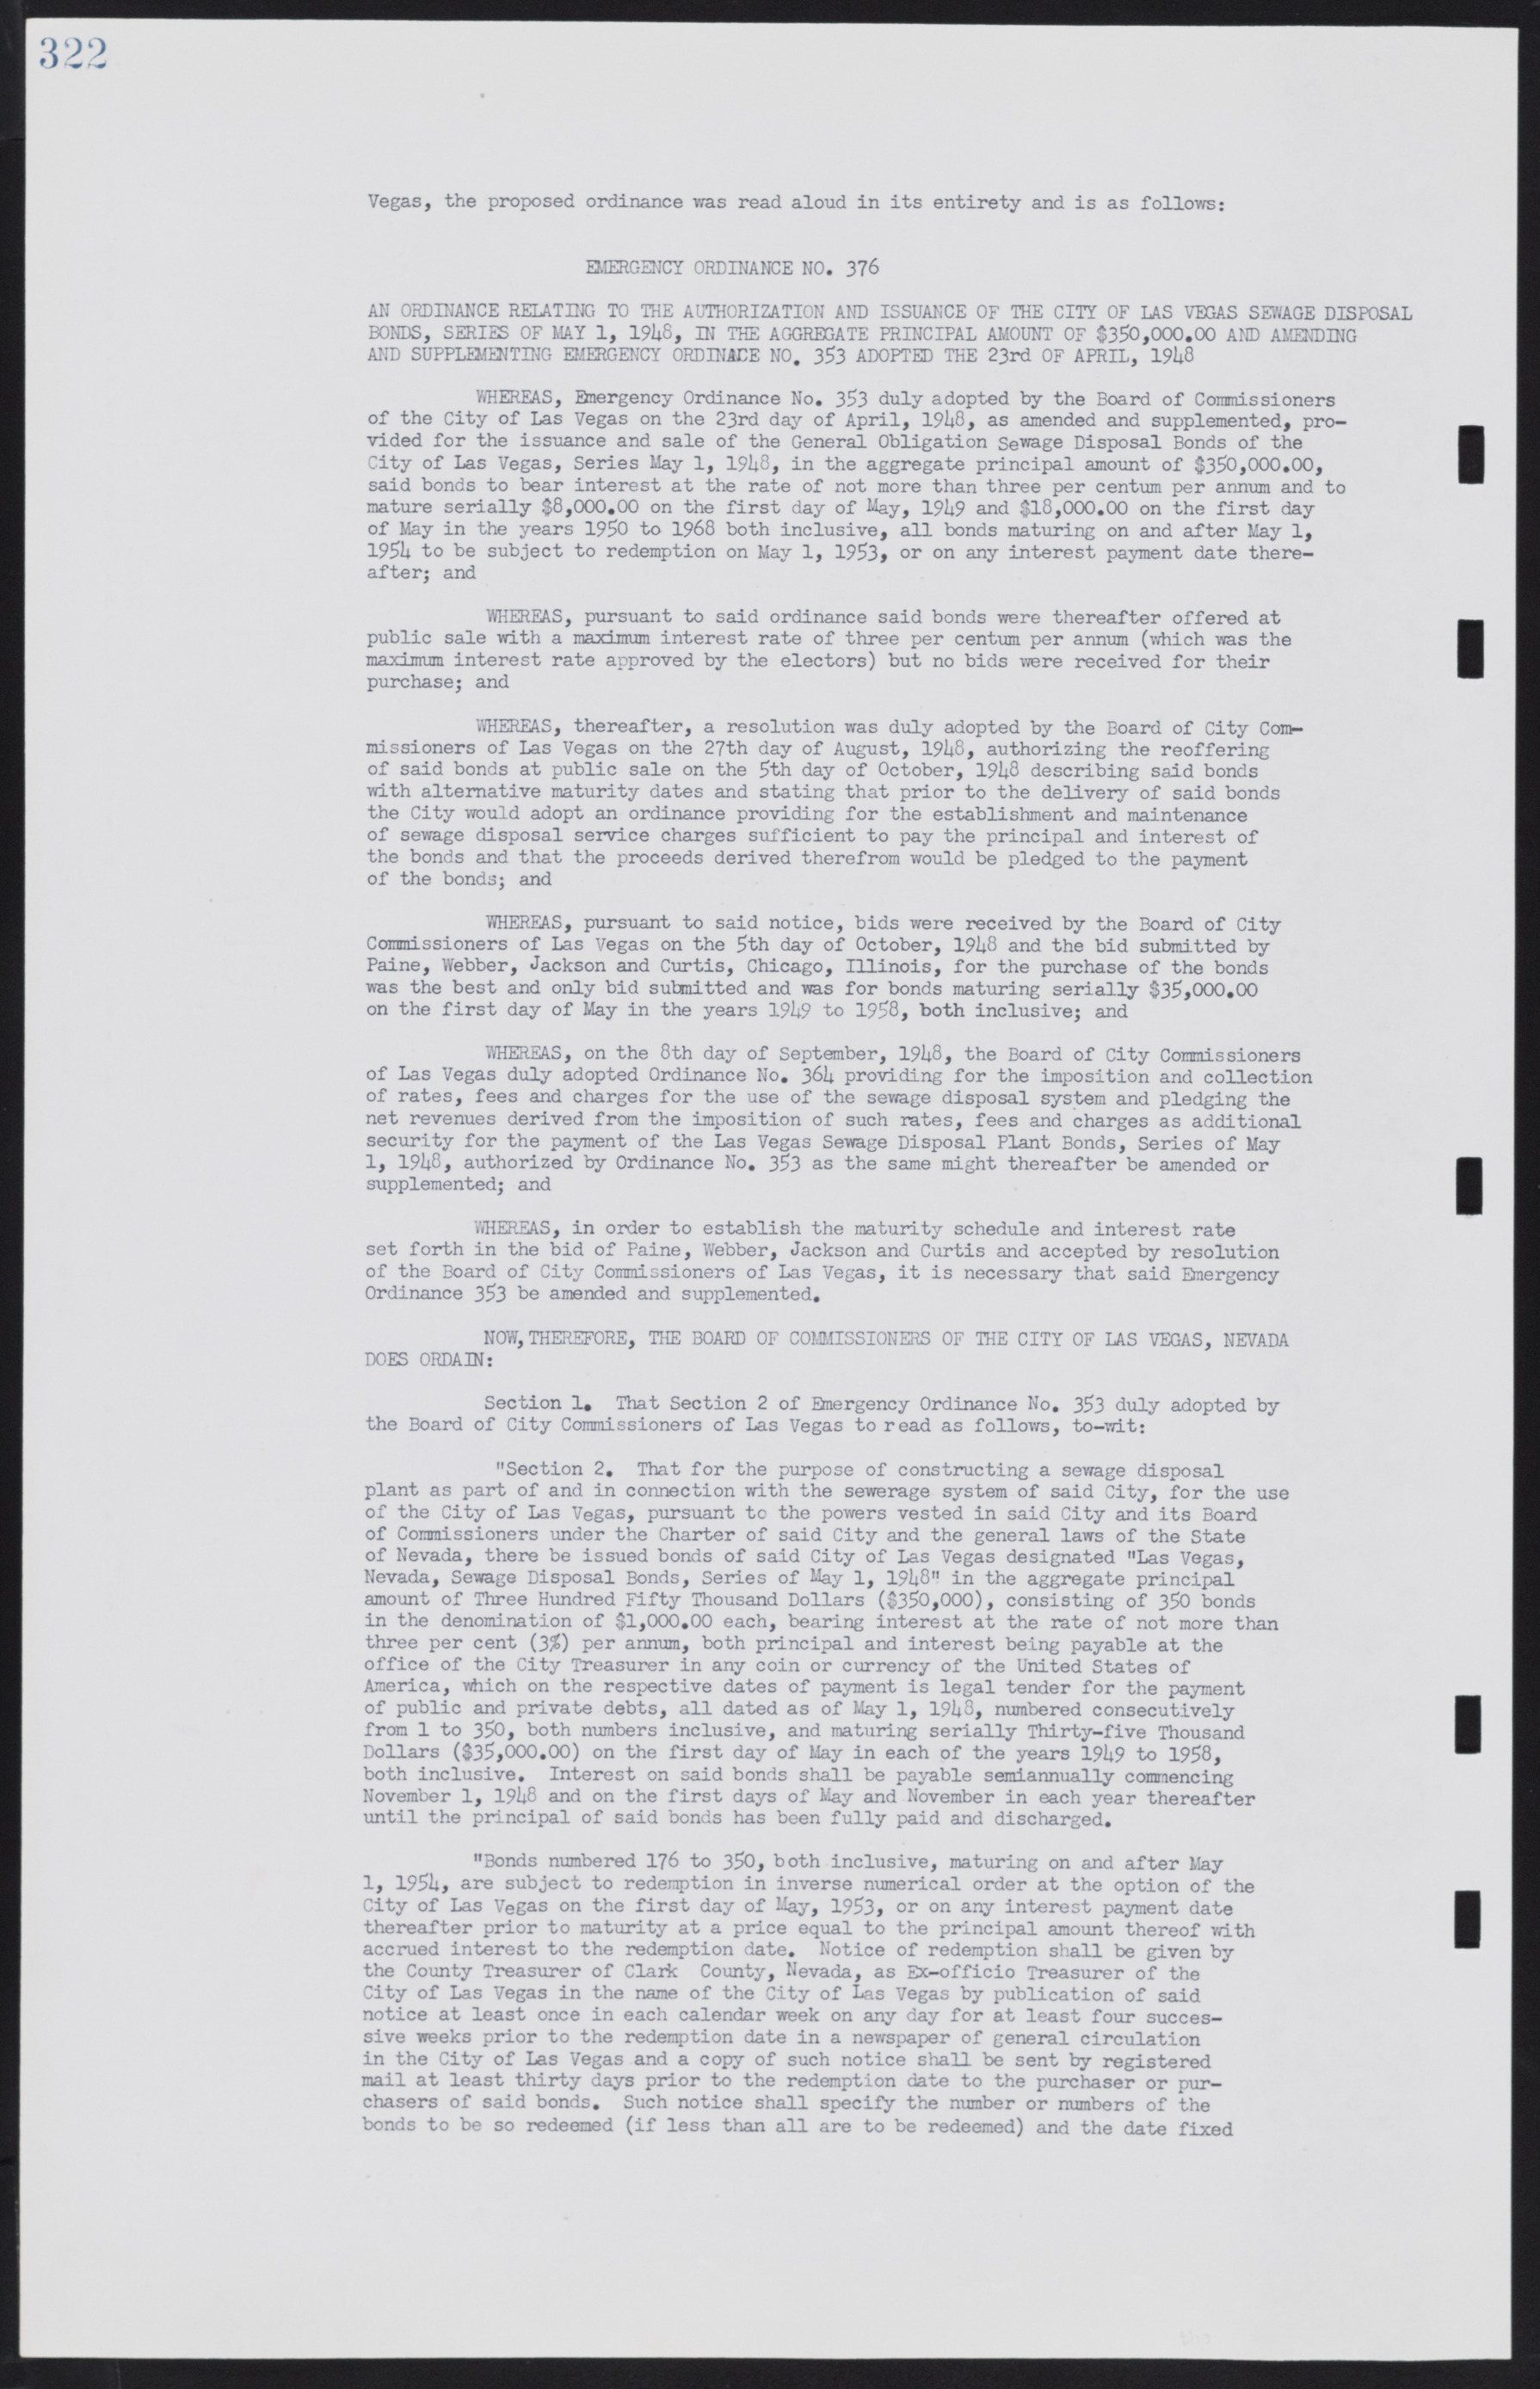 Las Vegas City Commission Minutes, January 7, 1947 to October 26, 1949, lvc000006-346